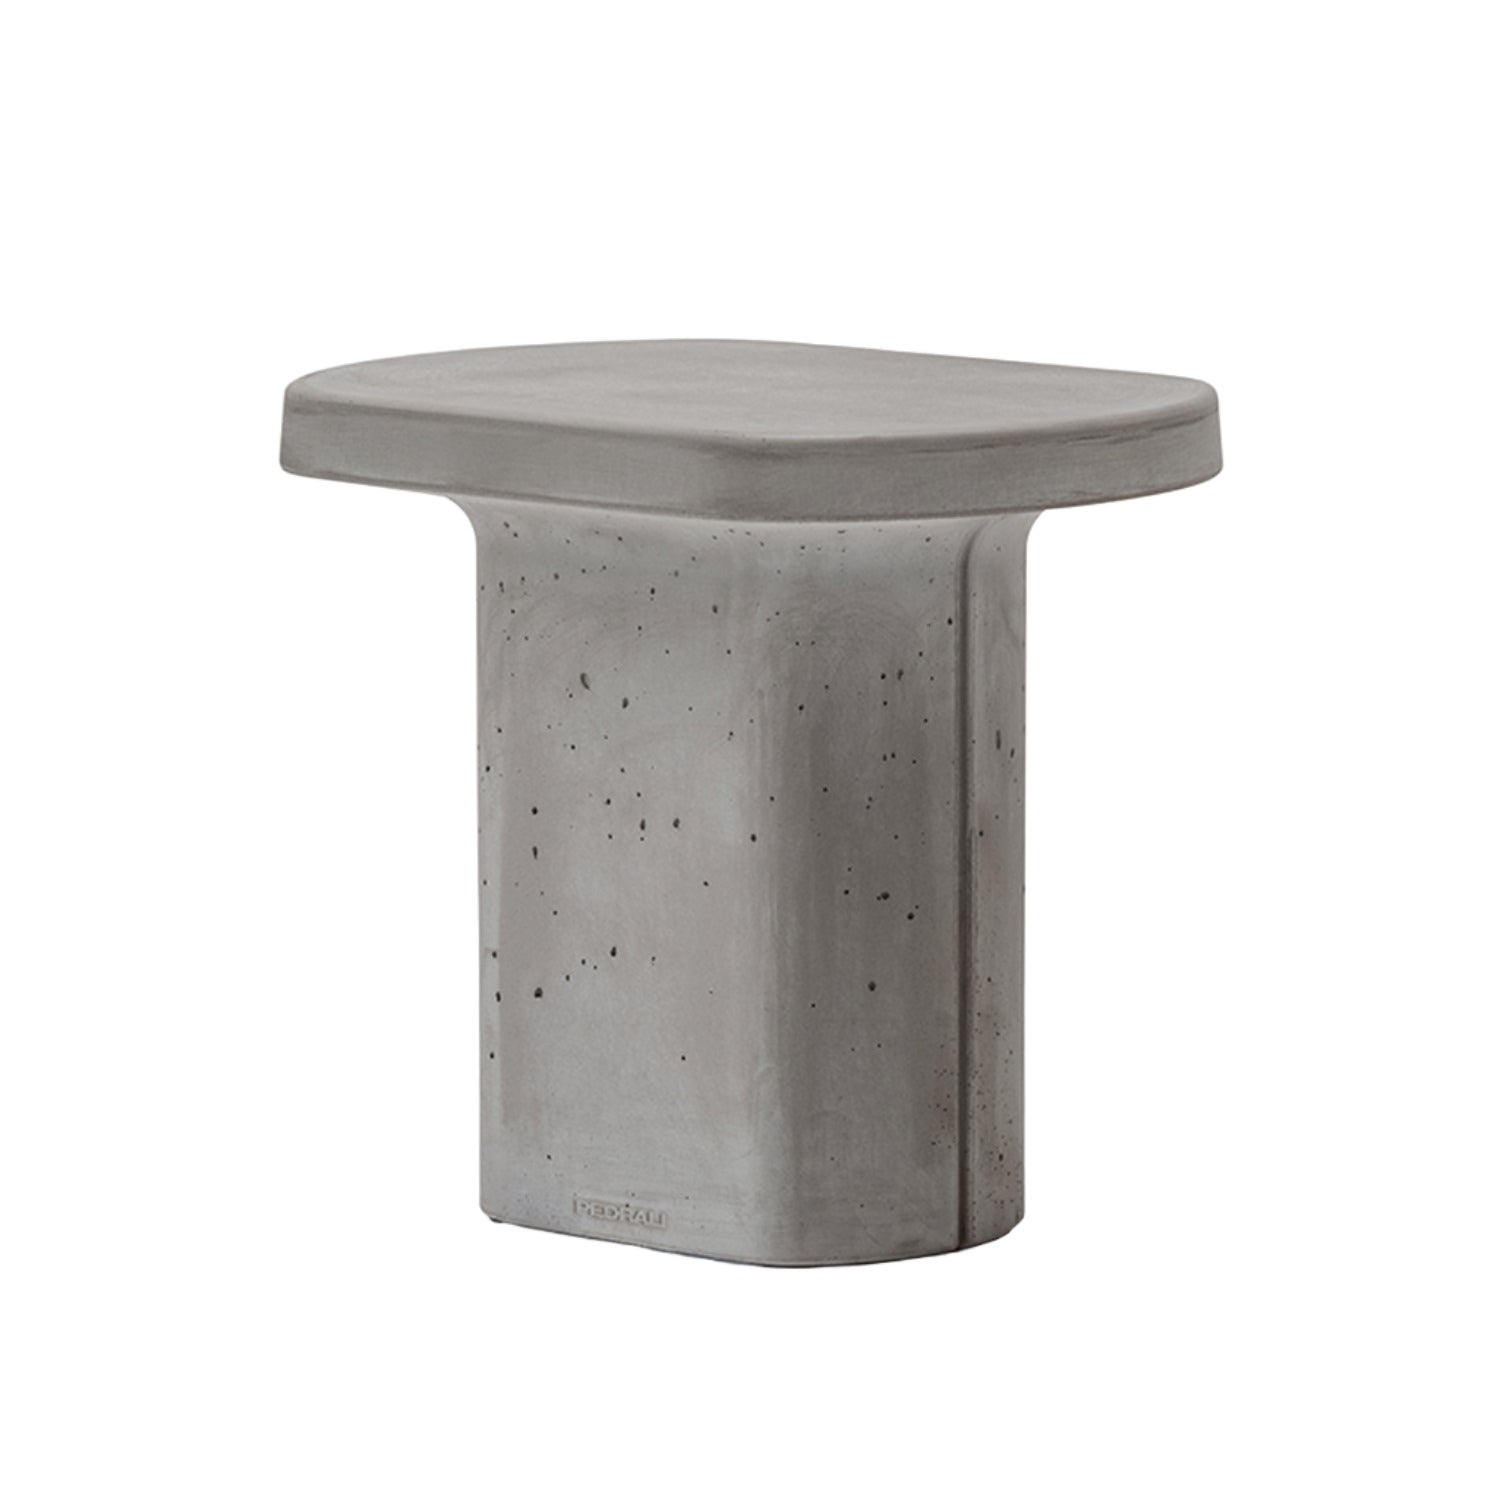 Pedrali Caementum side table in dark grey